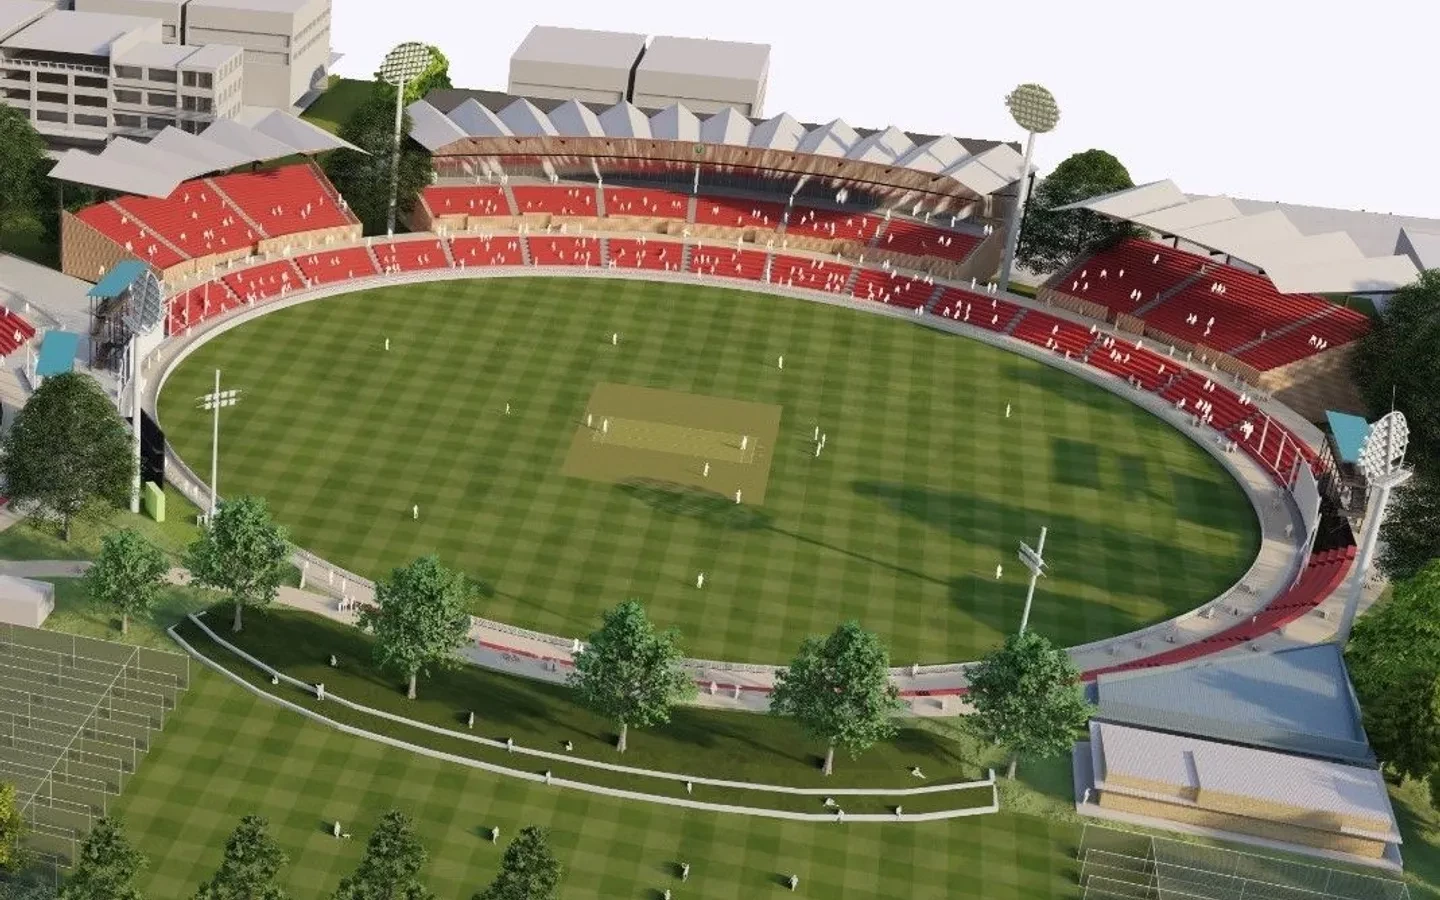 Queensland Cricket want venue upgraded prior to Brisbane 2032 Gabba rebuild